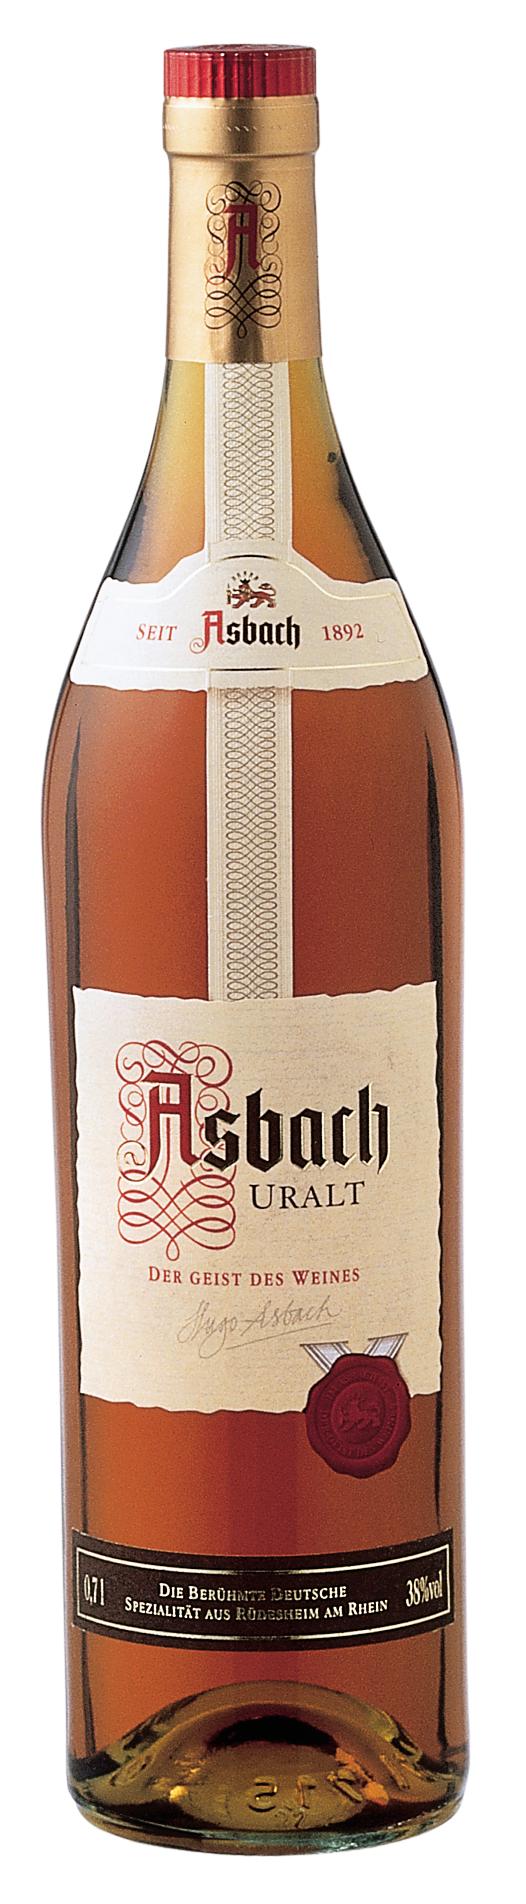 Asbach Uralt 0,7l günstig online kaufen bei Preis.de ✓